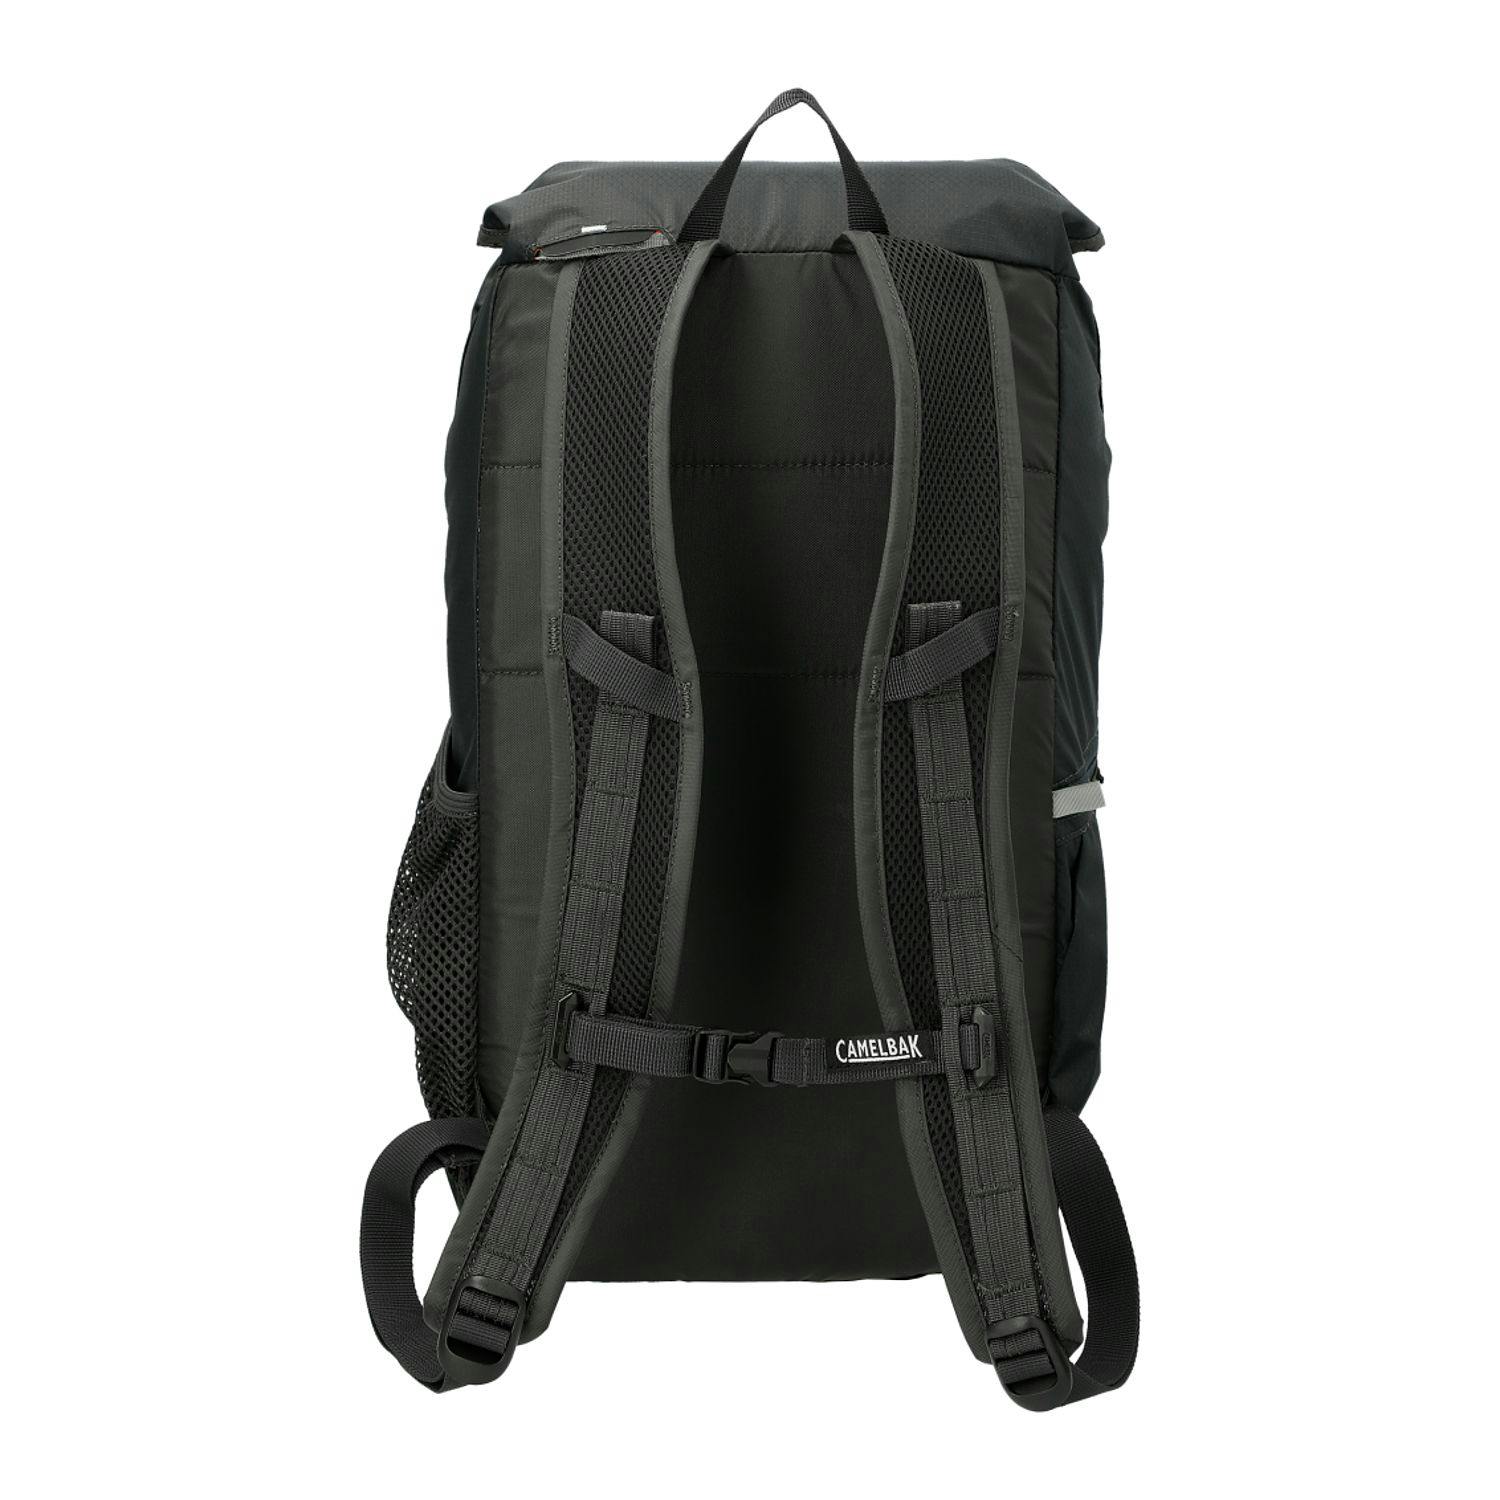 CamelBak Eco-Arete 18L Backpack - additional Image 1